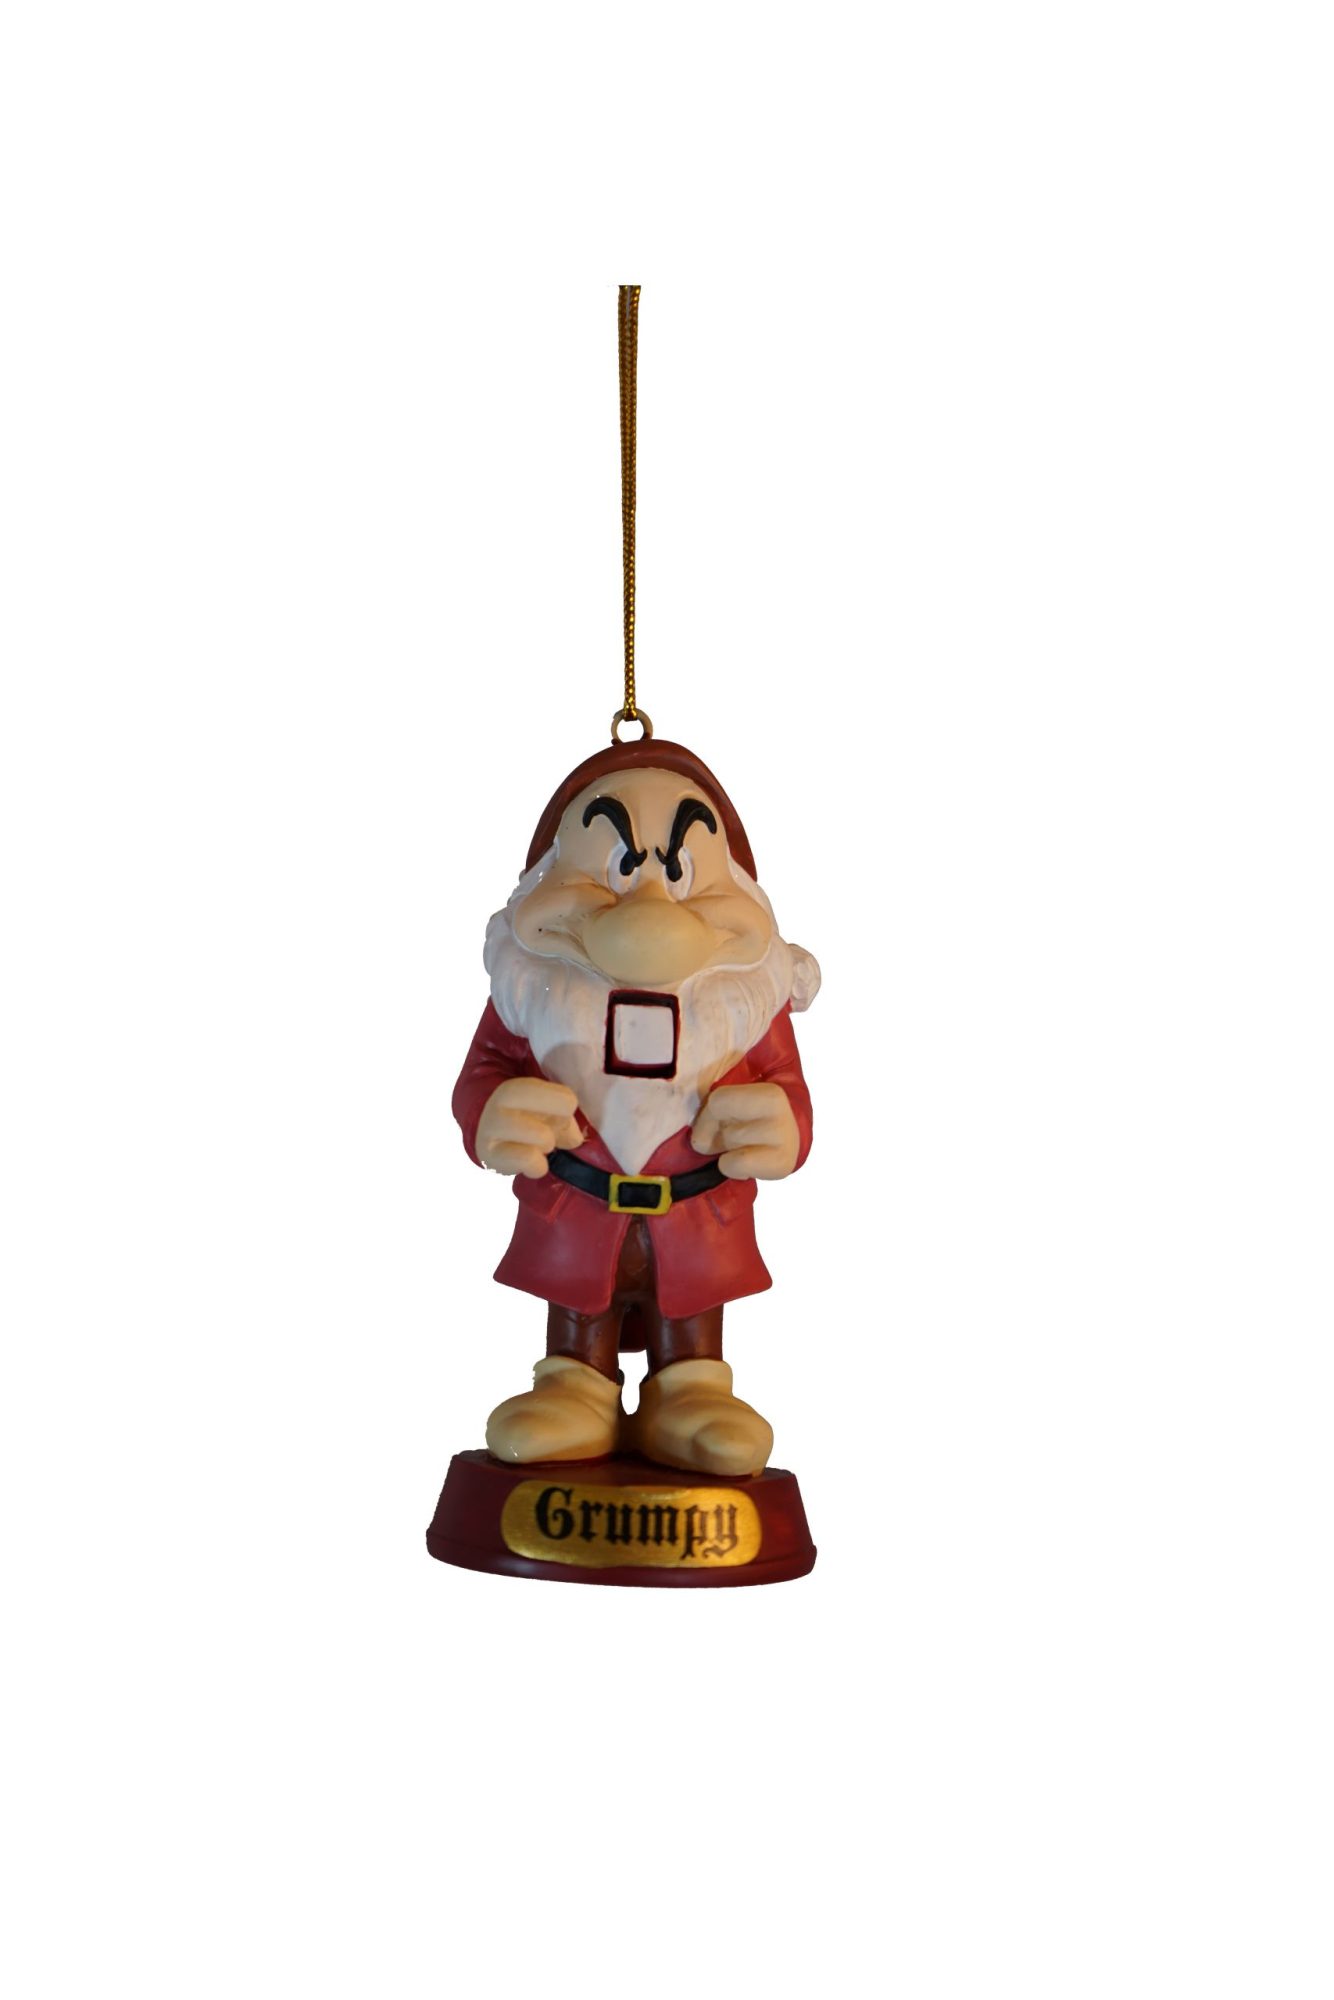 Grumpy nutcracker ornament